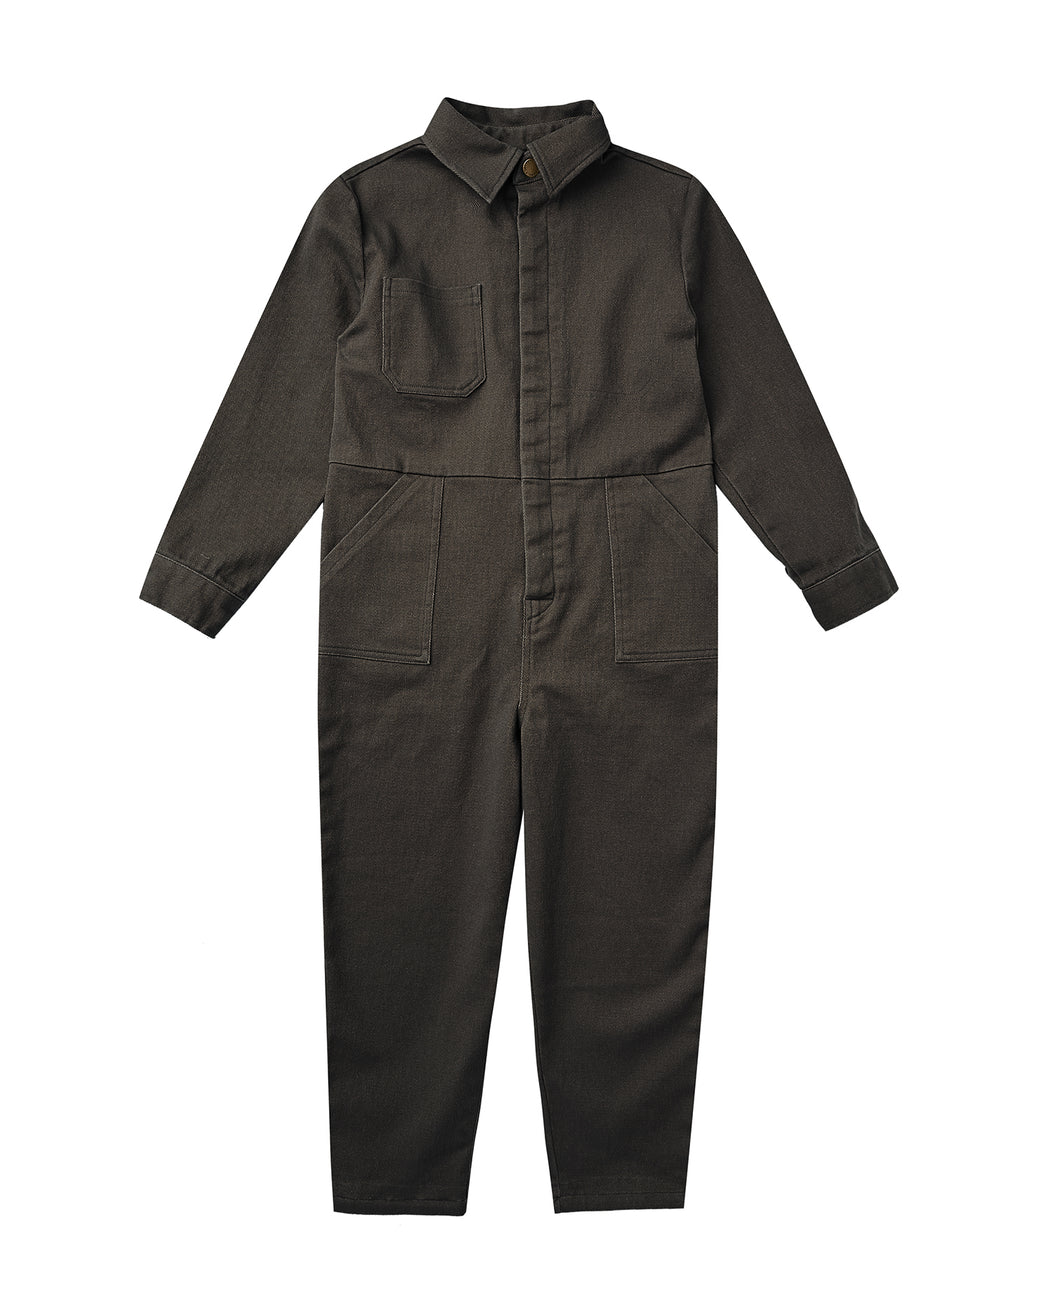 Coverall Jumpsuit – Vintage Black